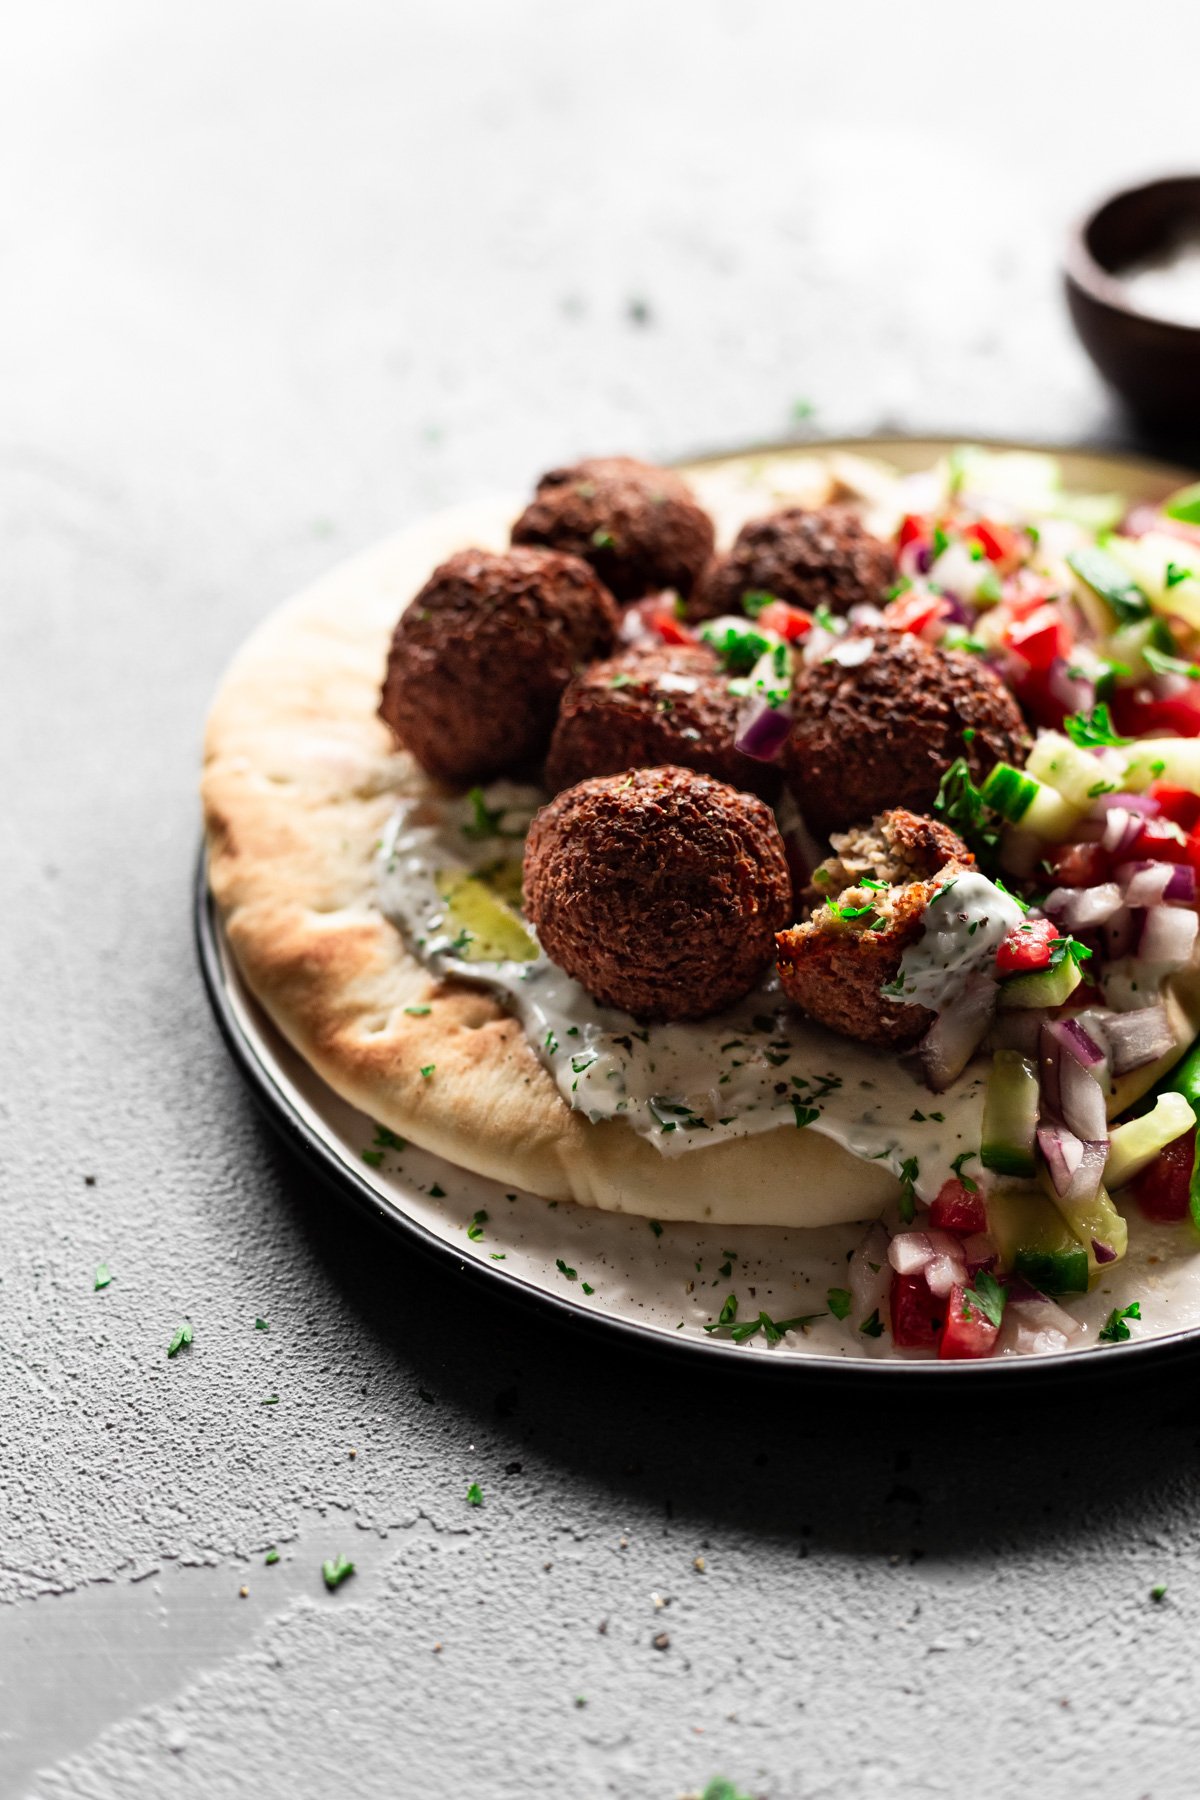 falafel on a pita with hummus, tzatziki, and israeli salad